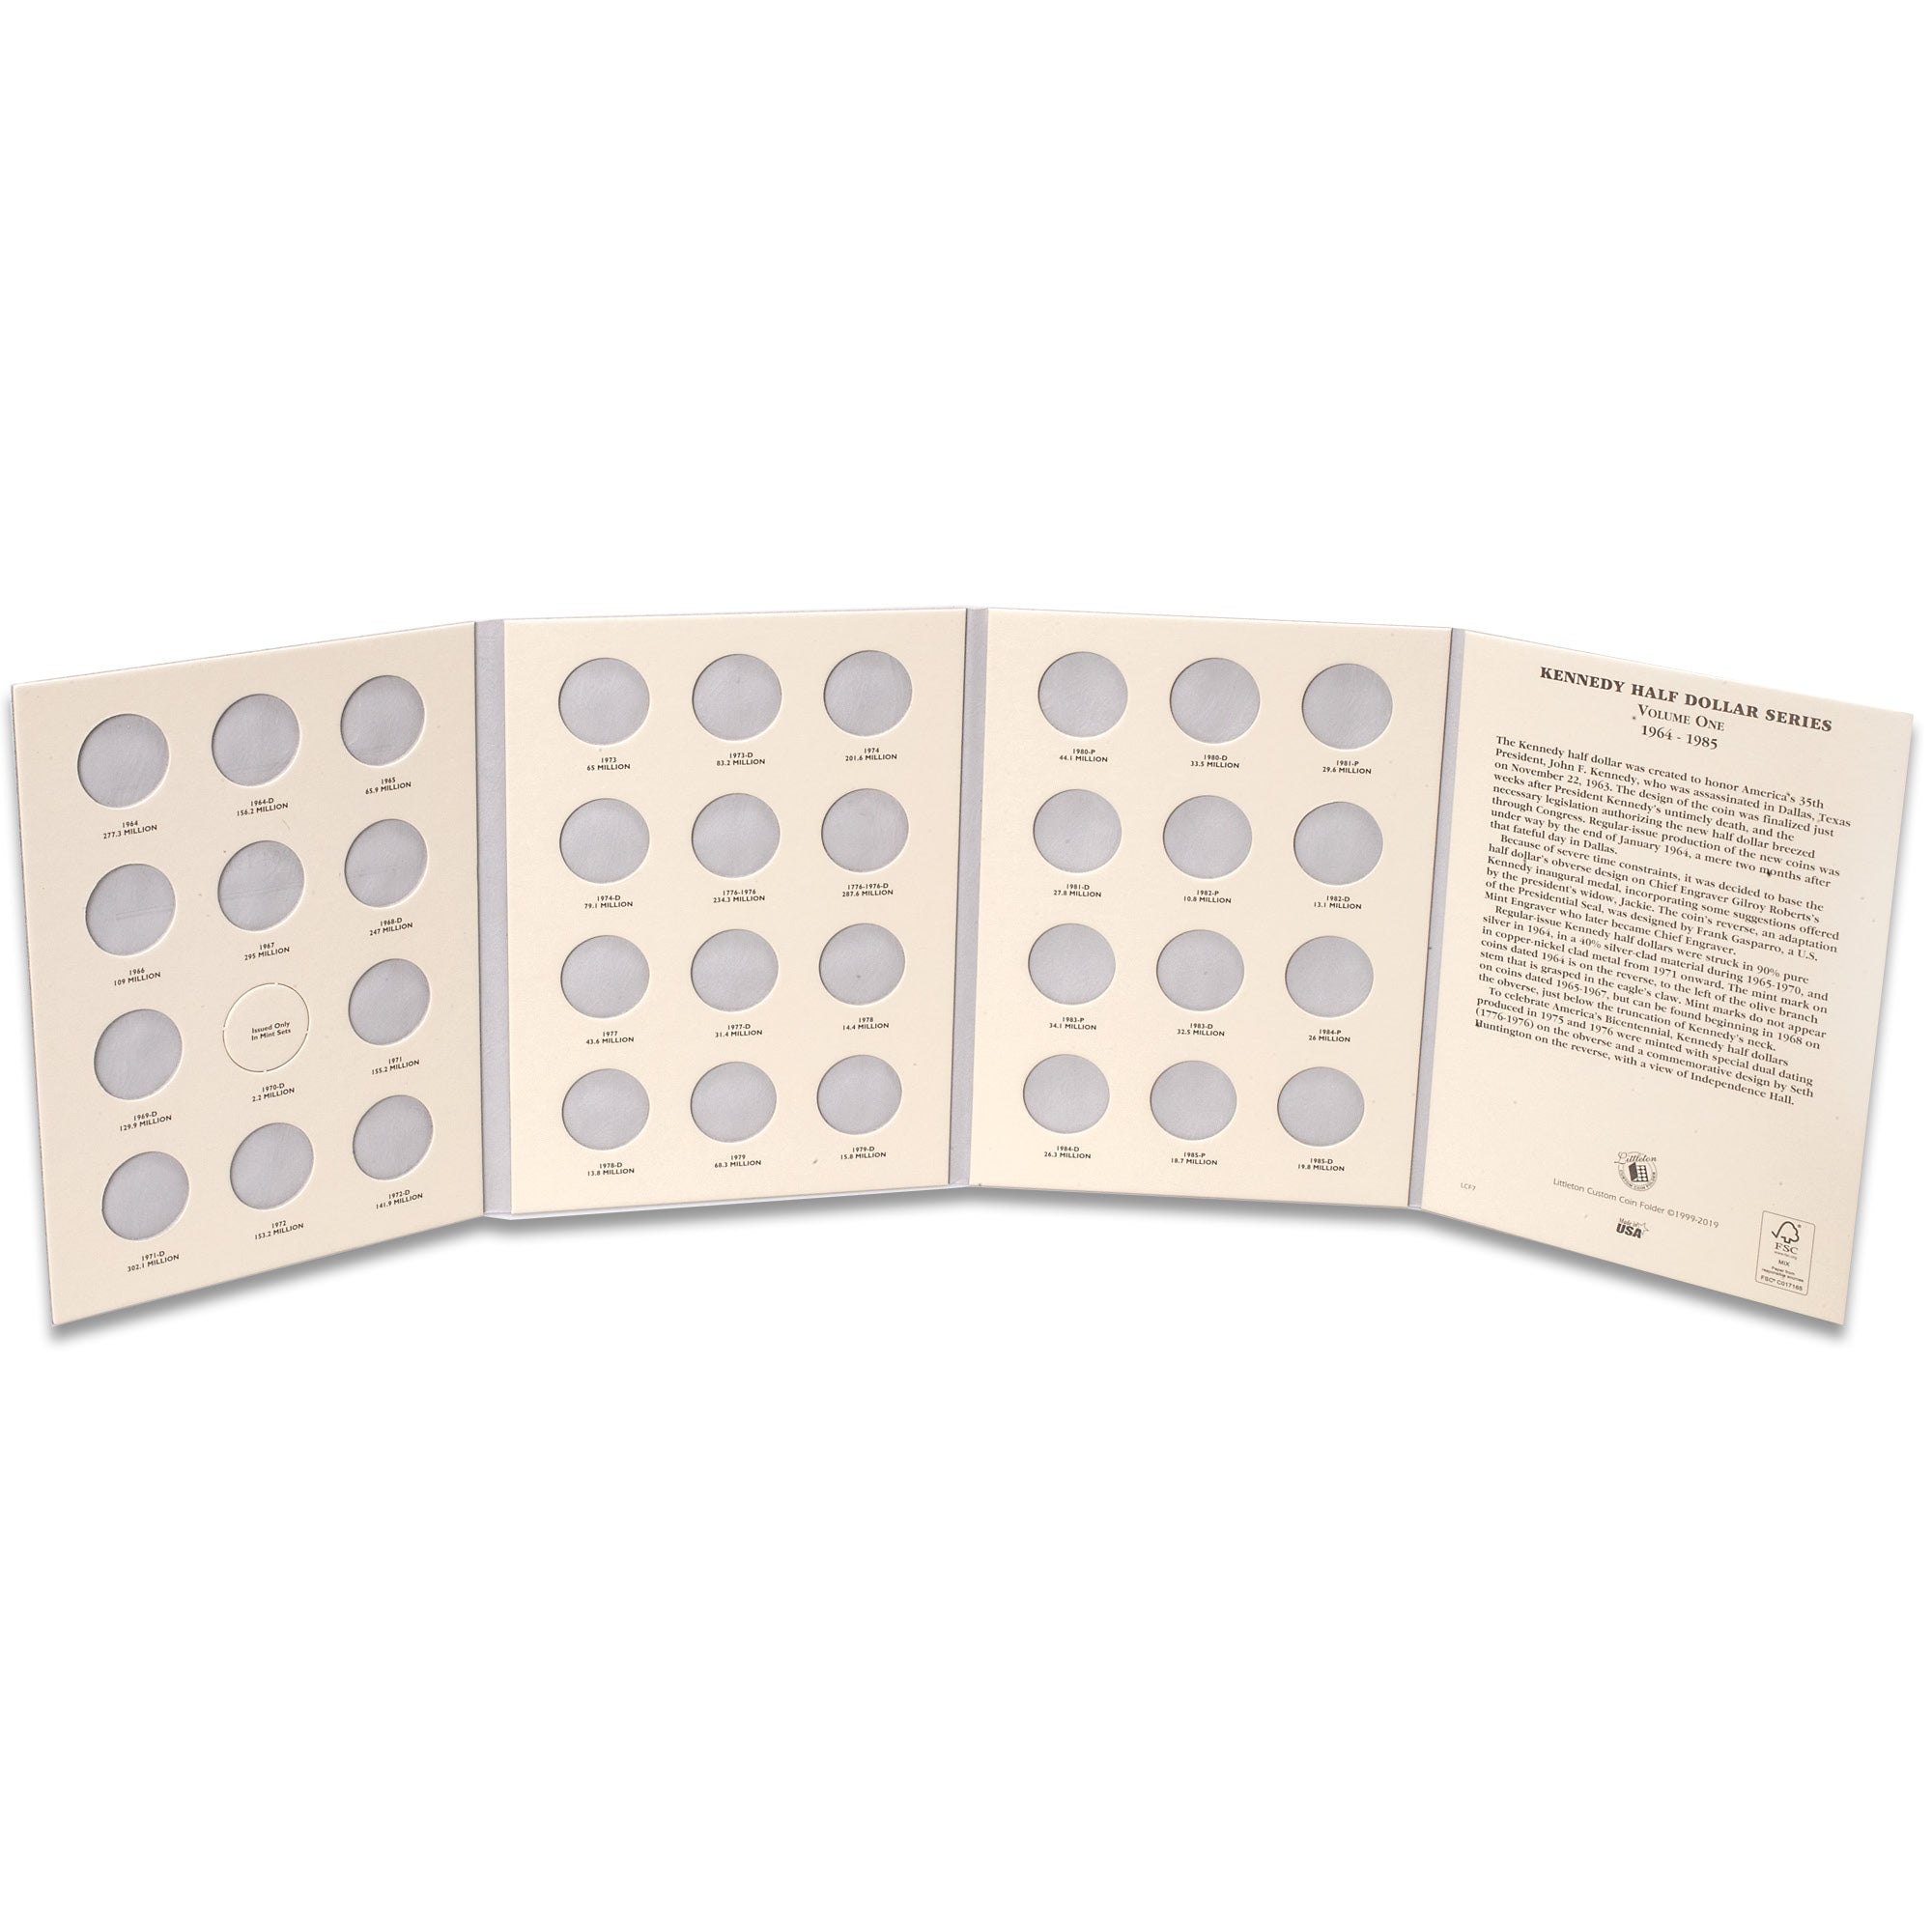 1964-1985 Kennedy Half Dollar Folder Volume 1 Littleton Coin Company